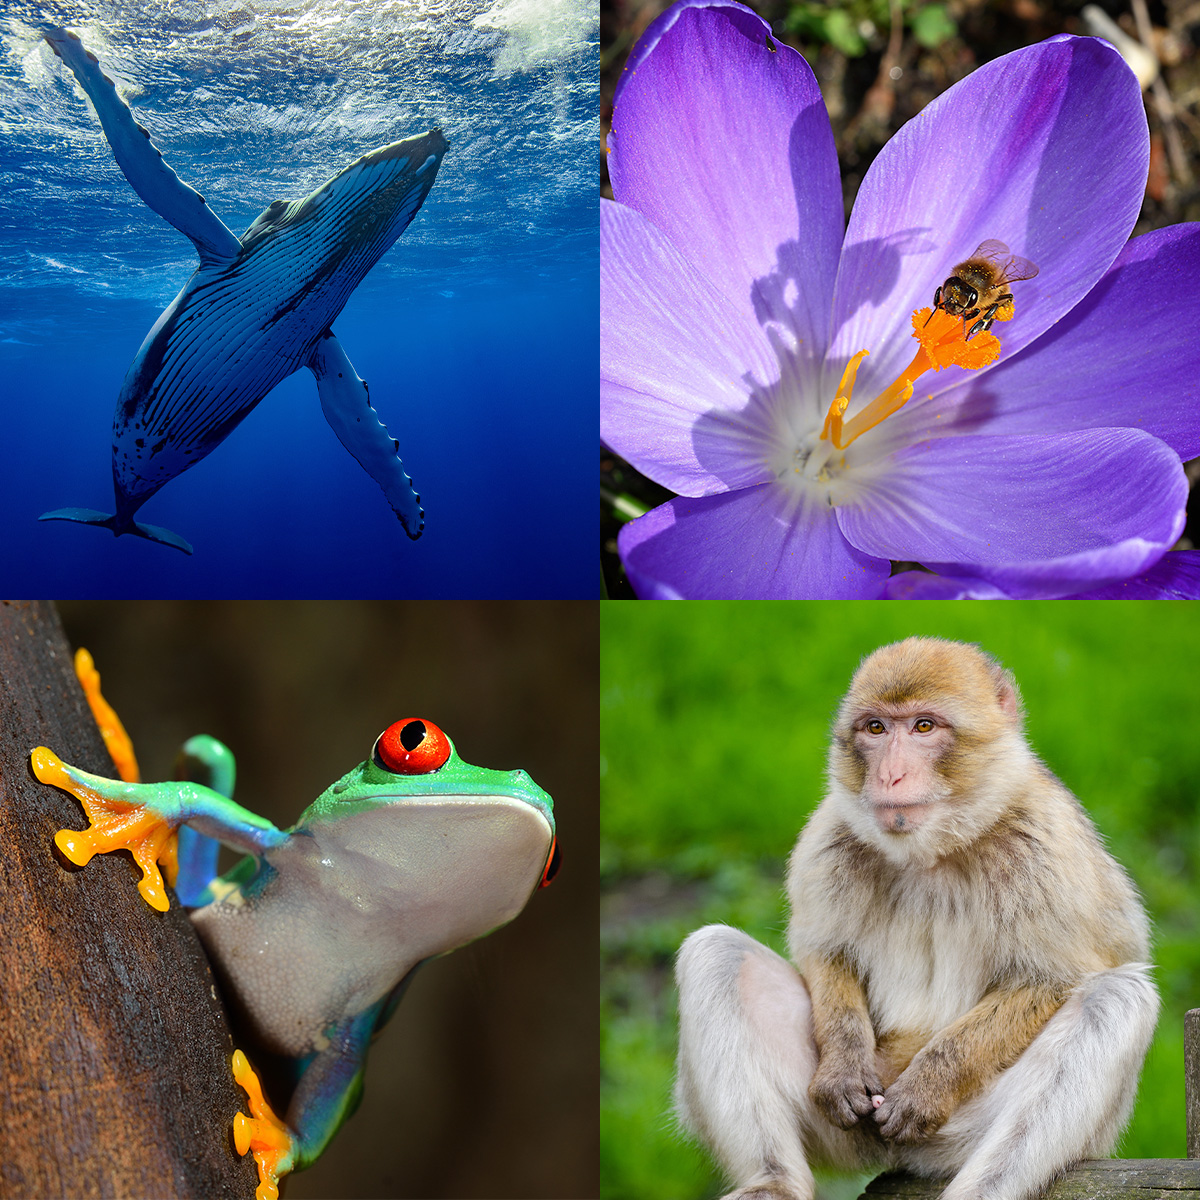 examples of biodiversity in animals